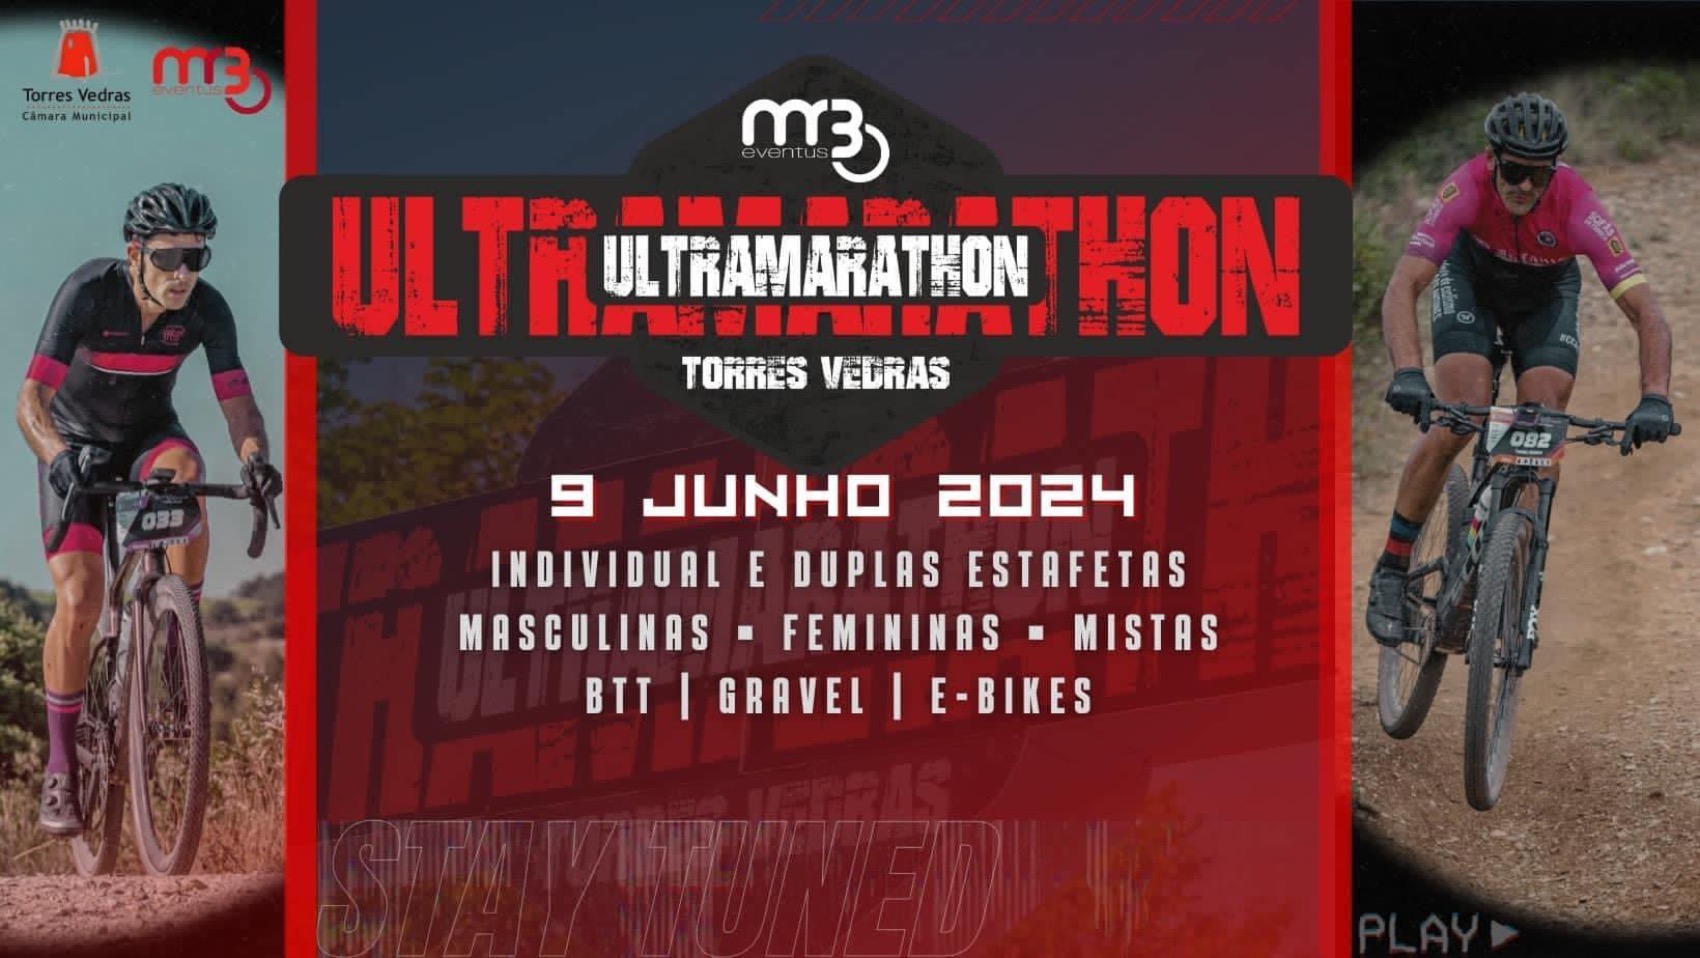 imagem-Ultramarathon-Torres-Vedras